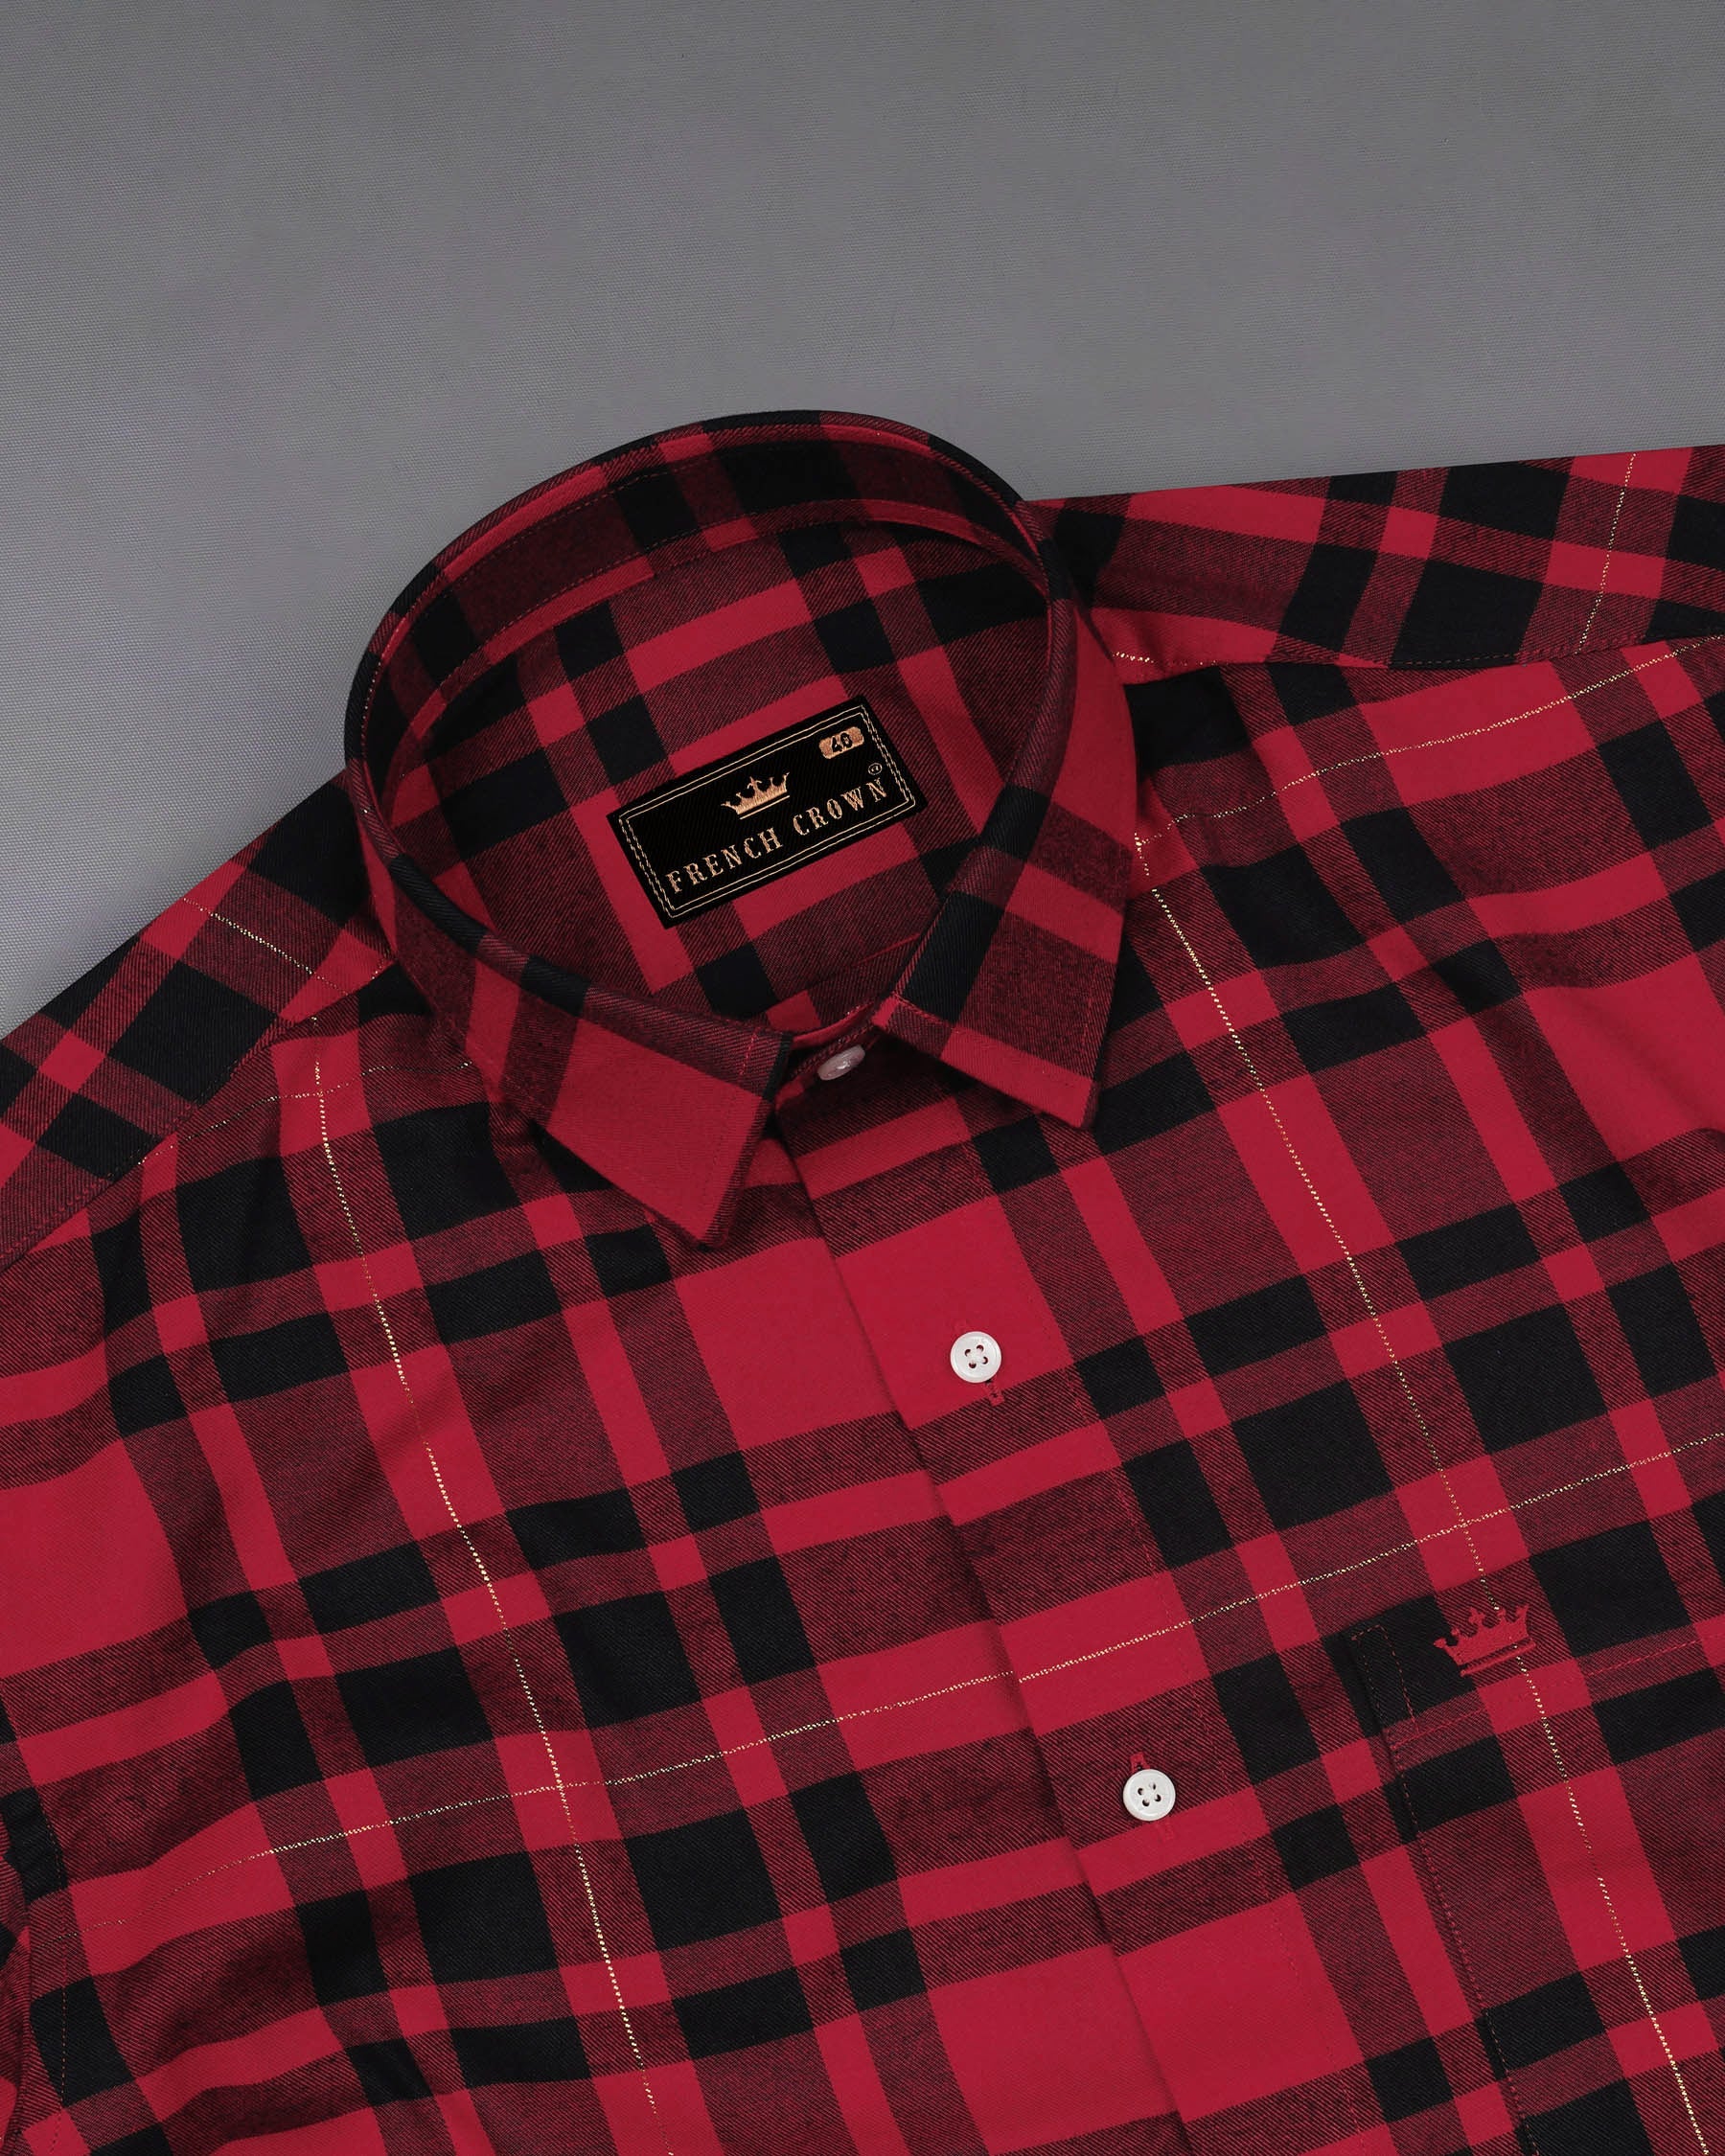 Vivid Auburn Red Plaid Flannel Premium Cotton Shirt